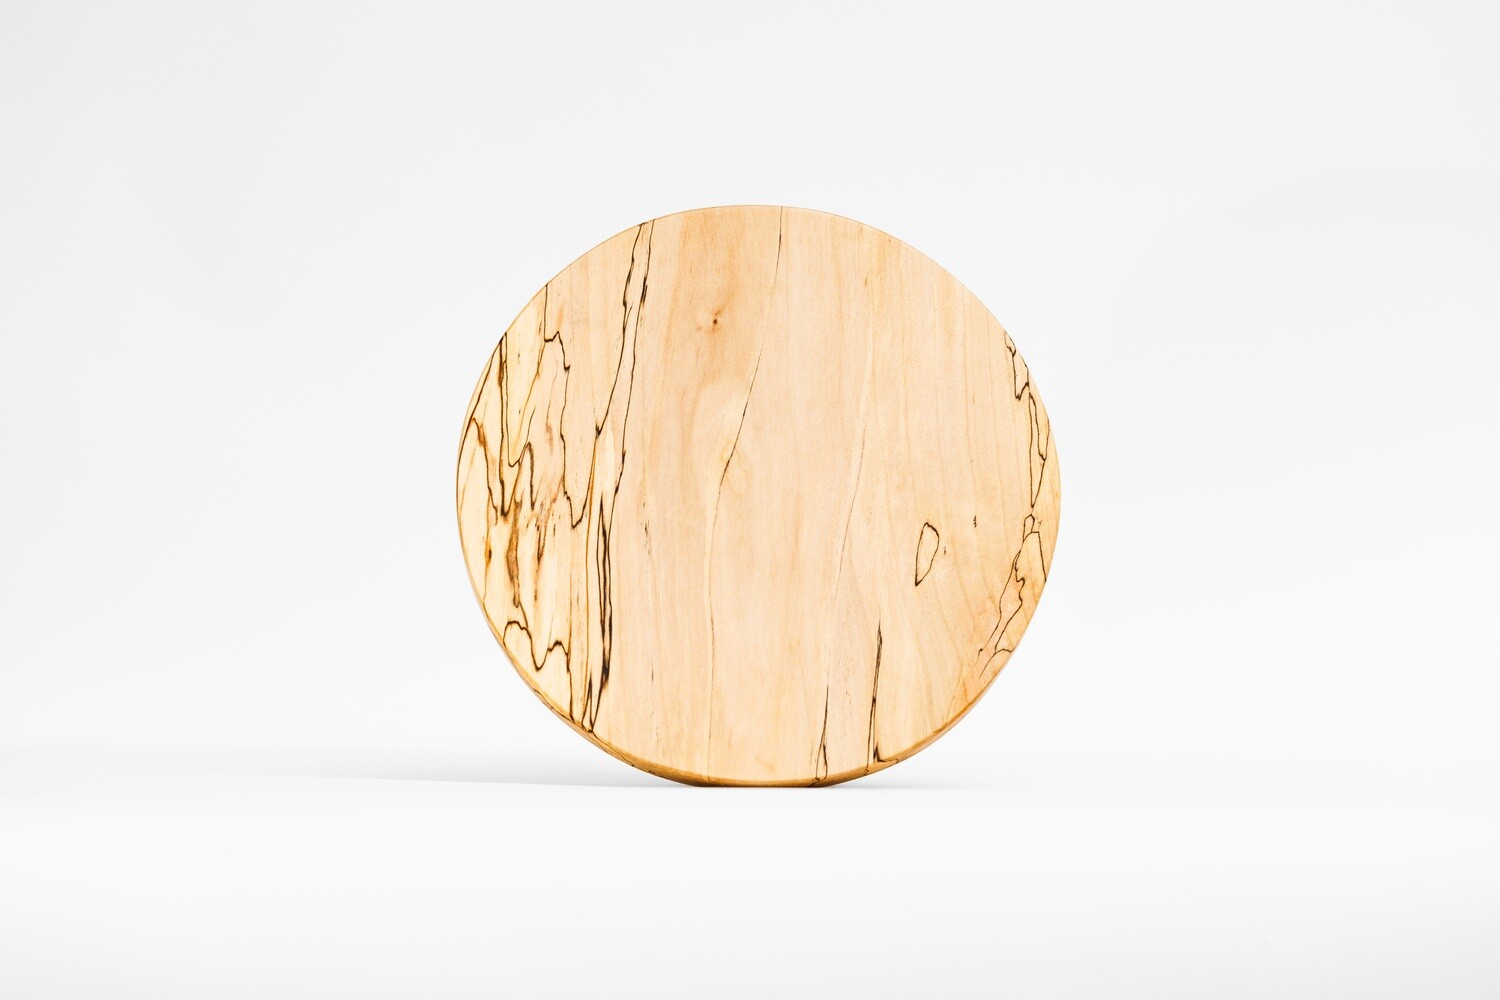 Peterman’s 15” maple round board